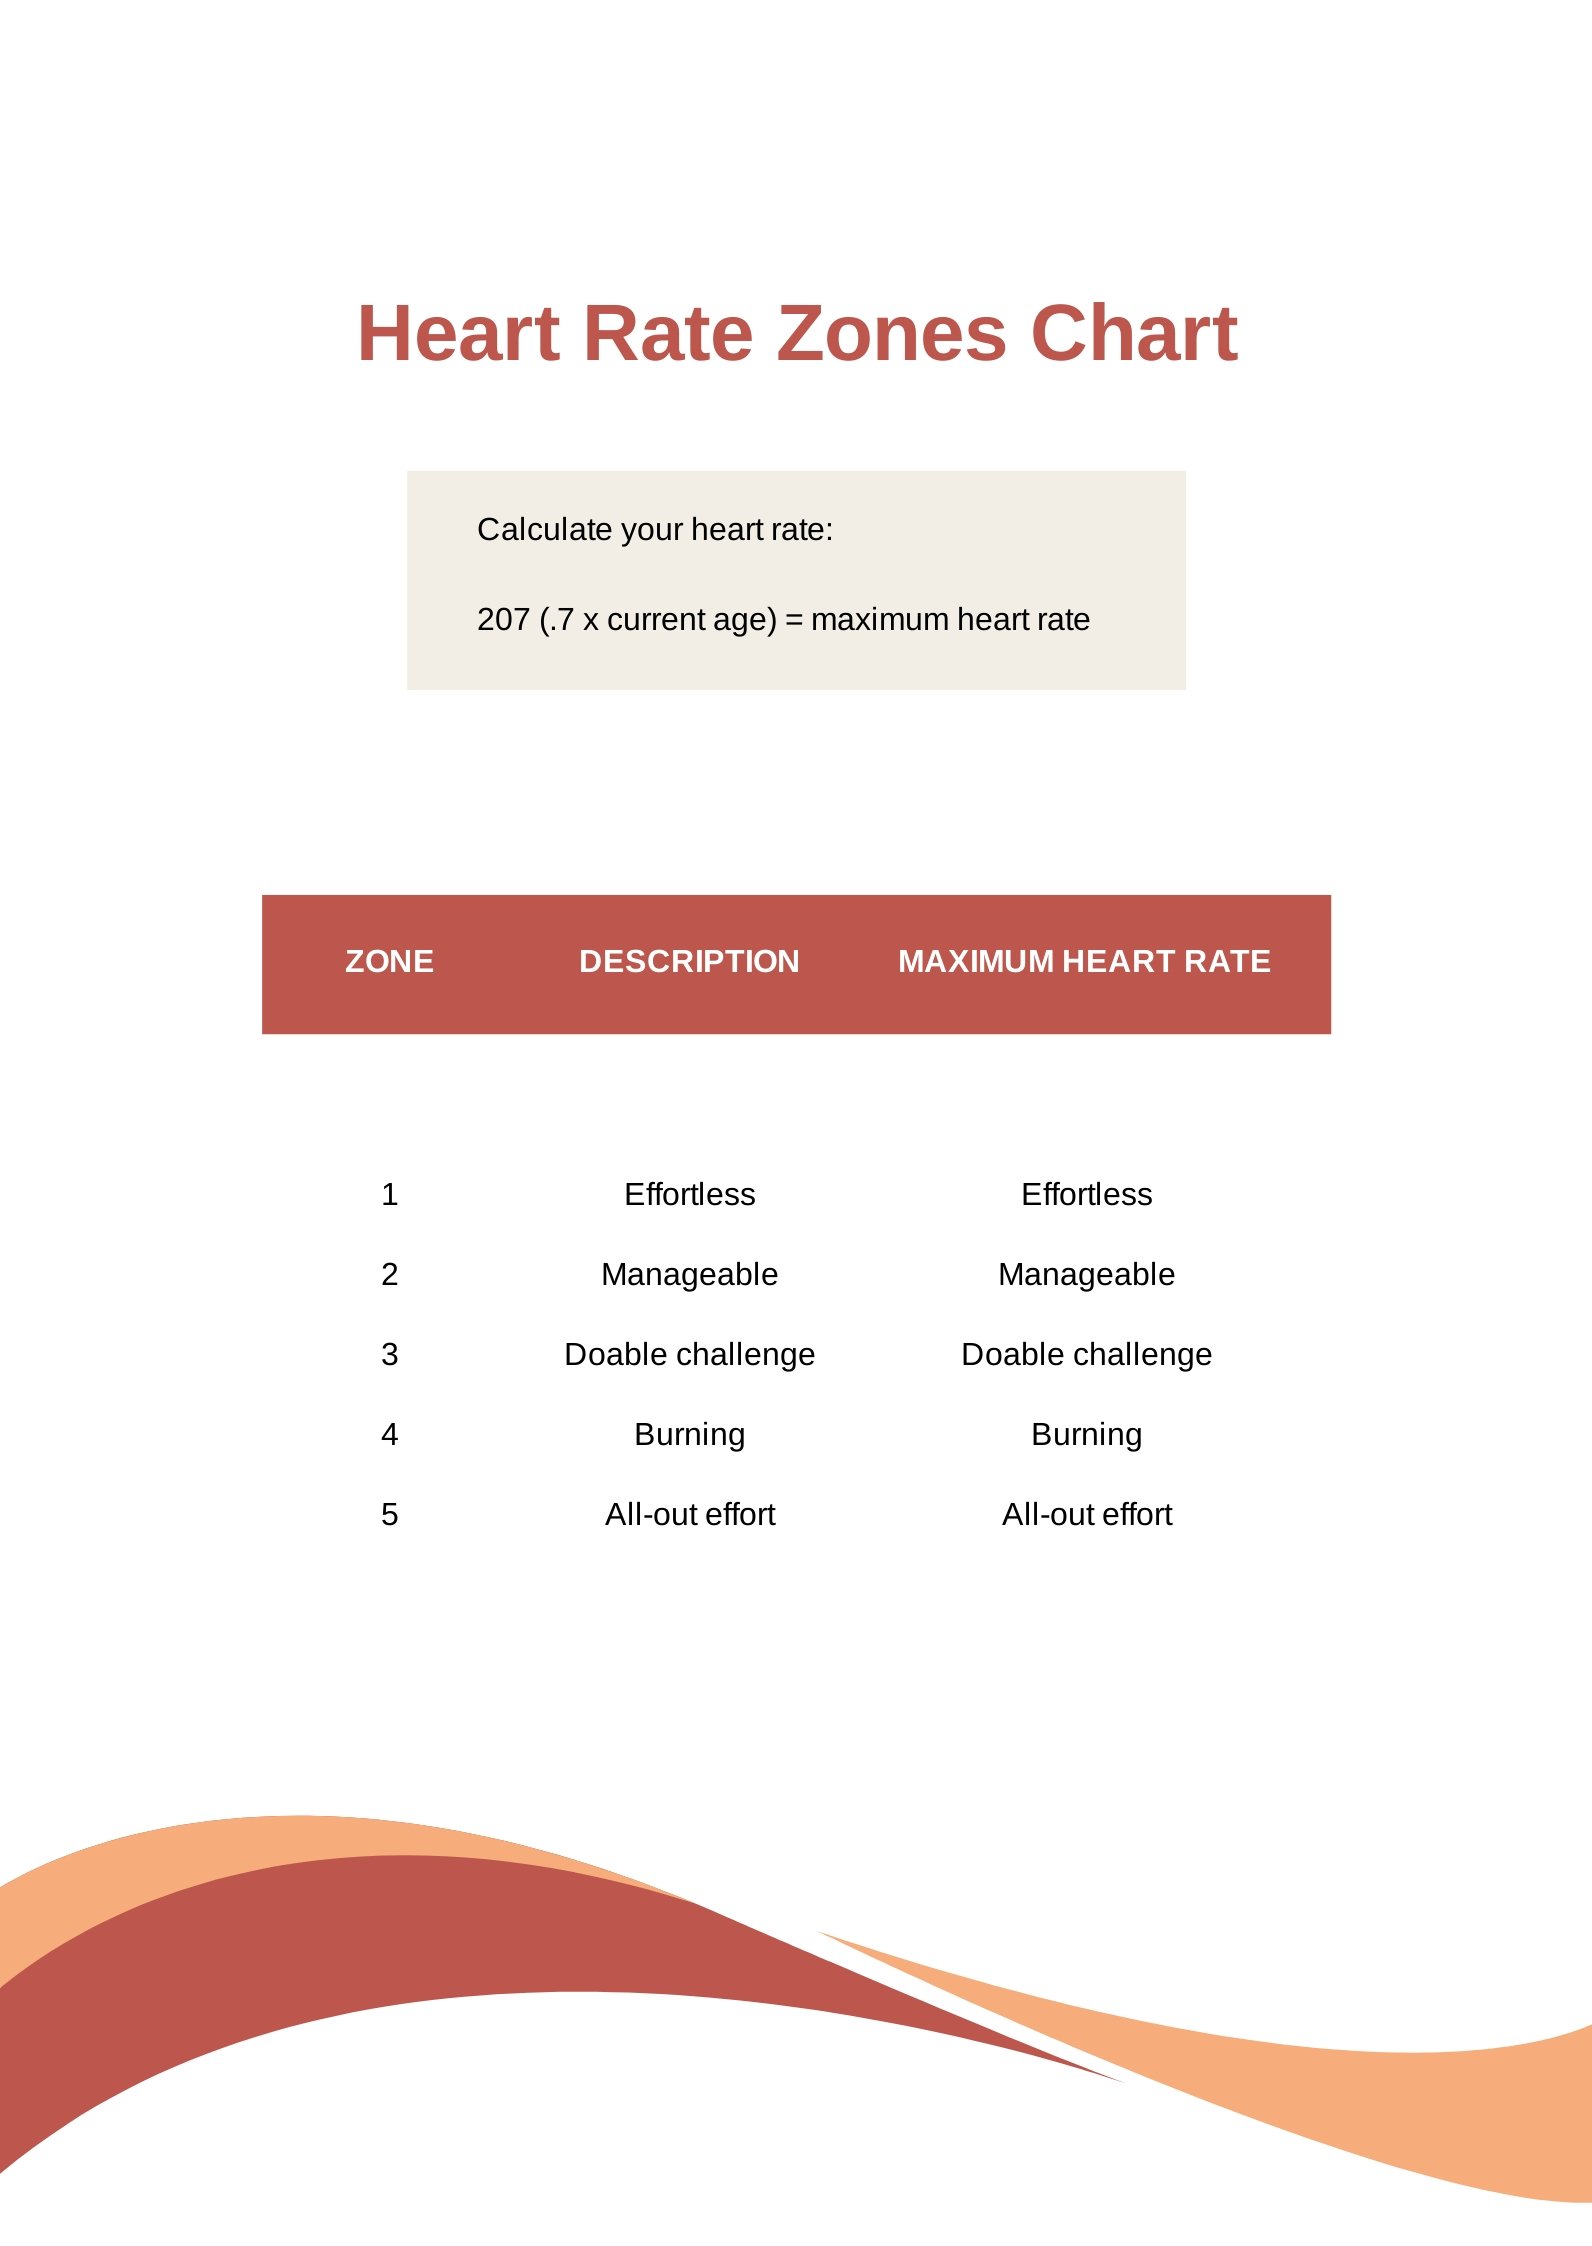 Heart Rate Zones Chart